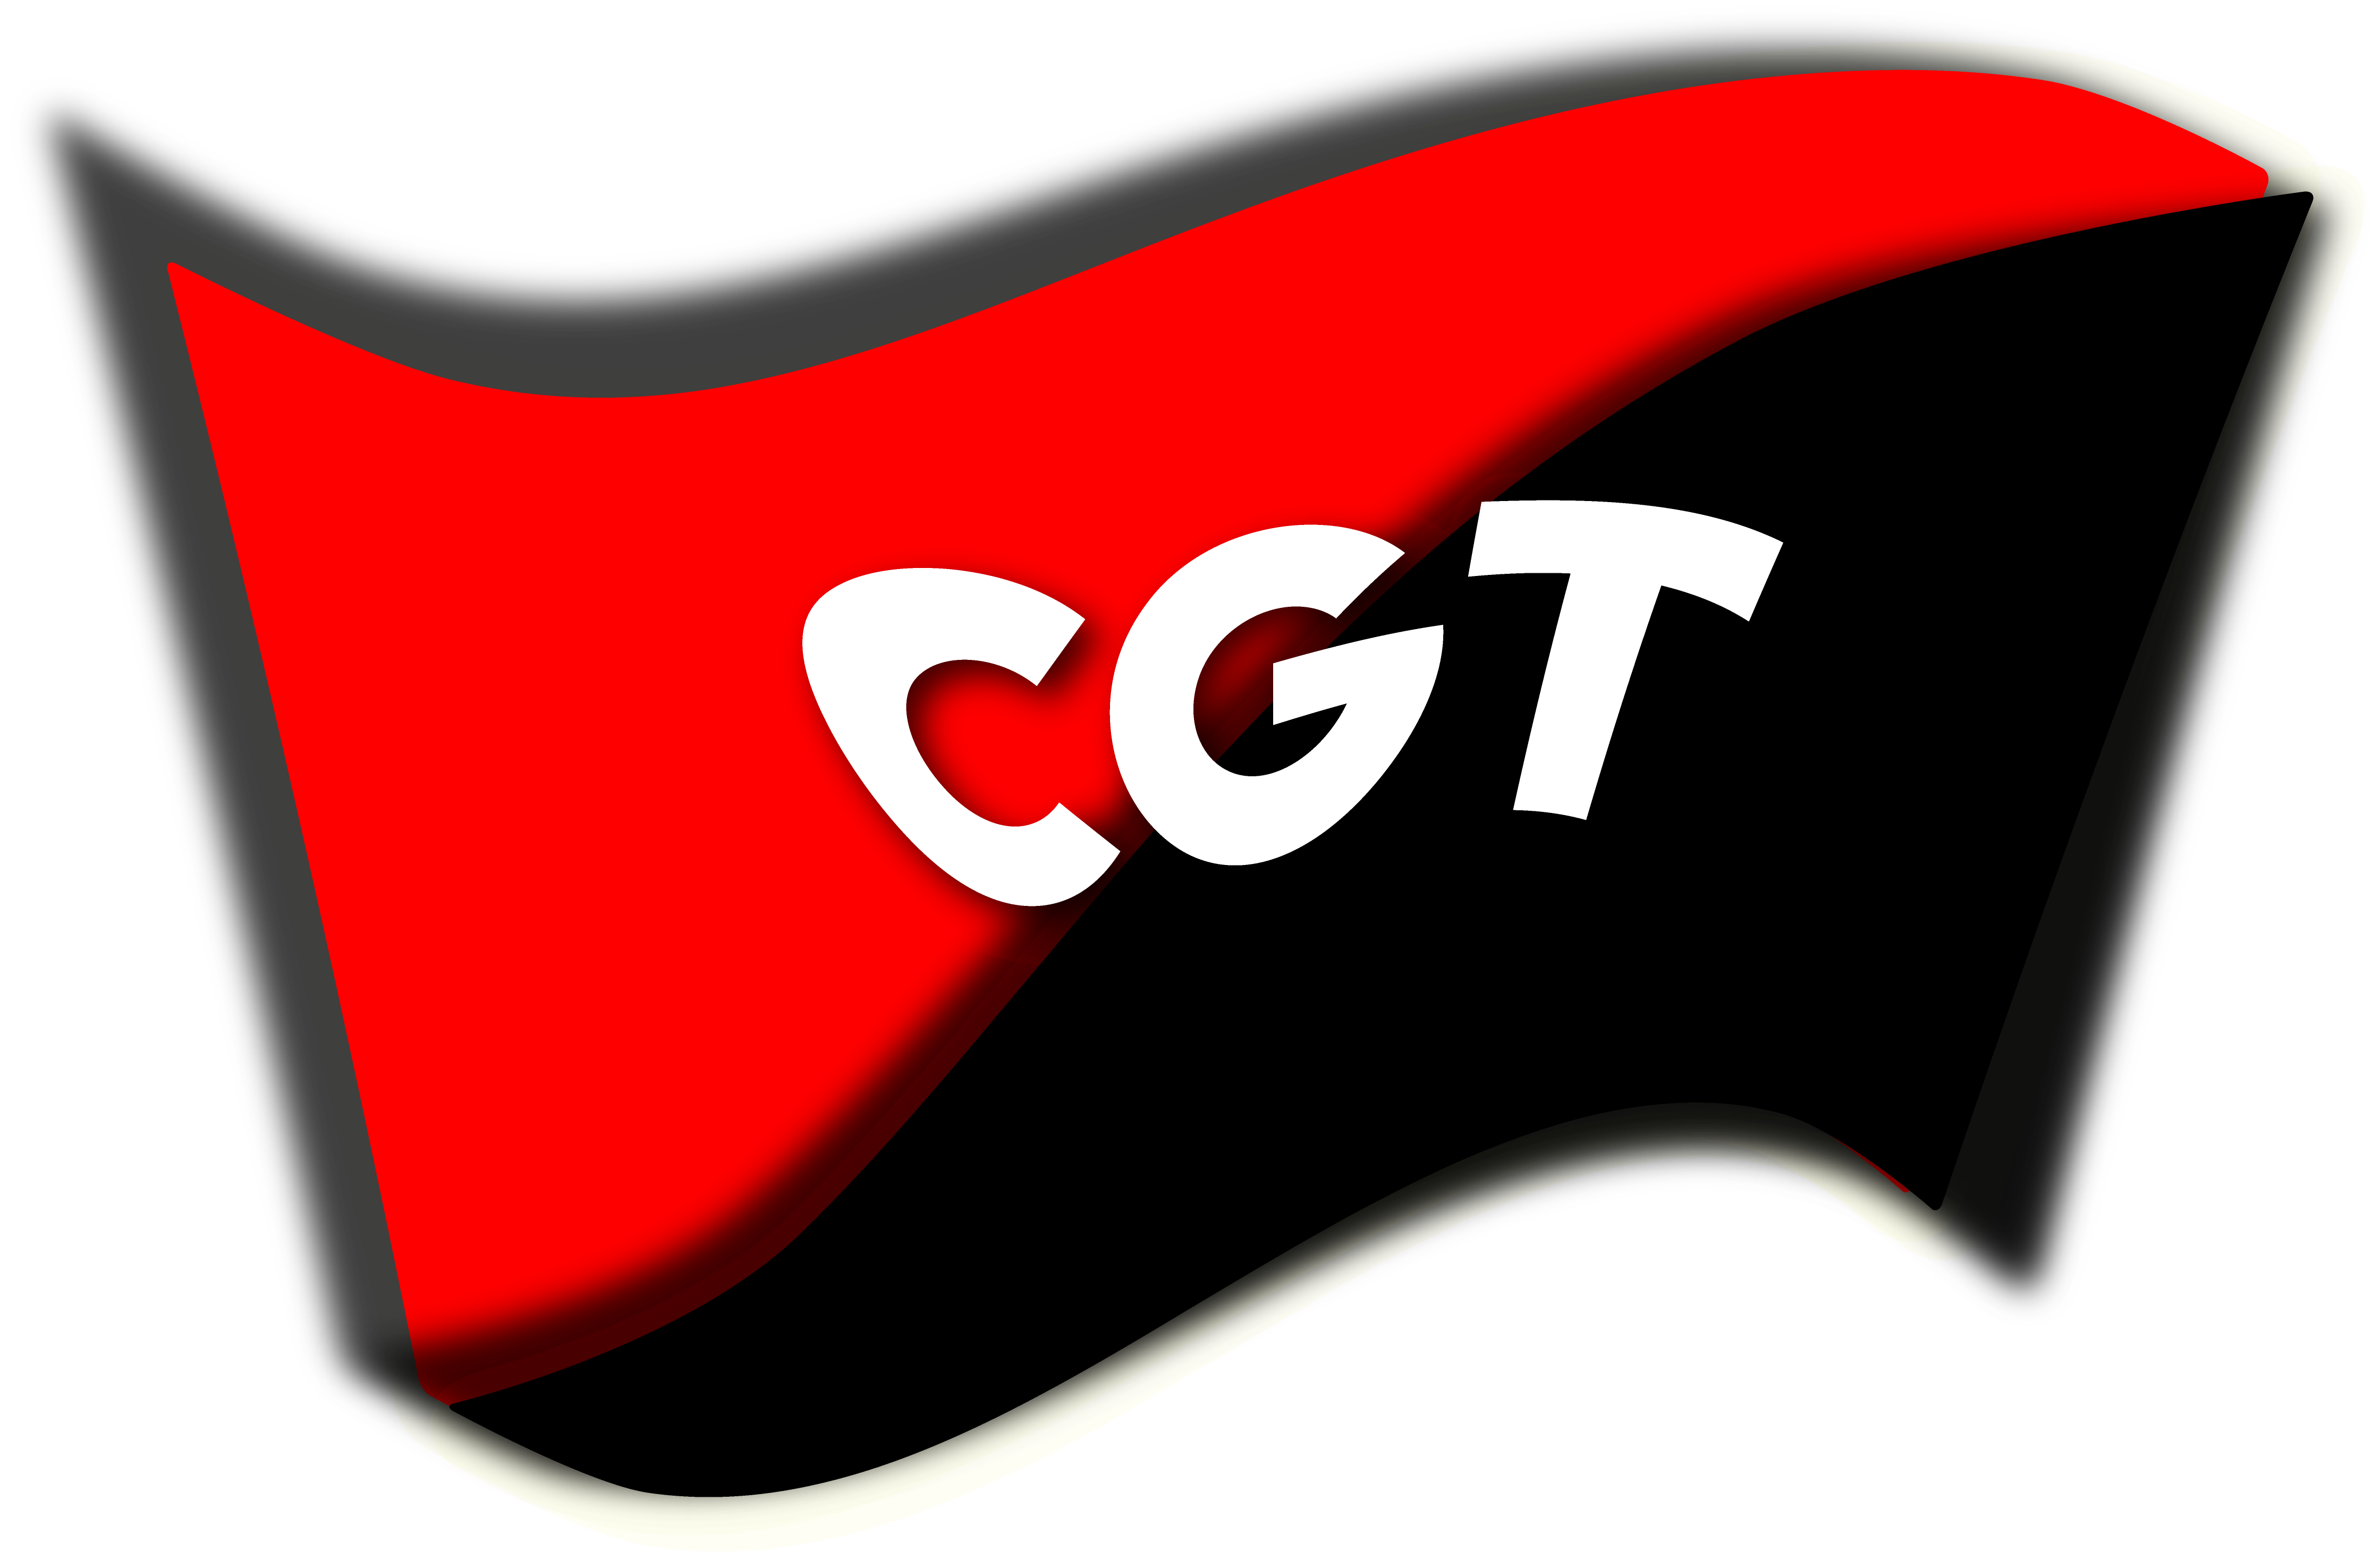 cgt_logo_bandera